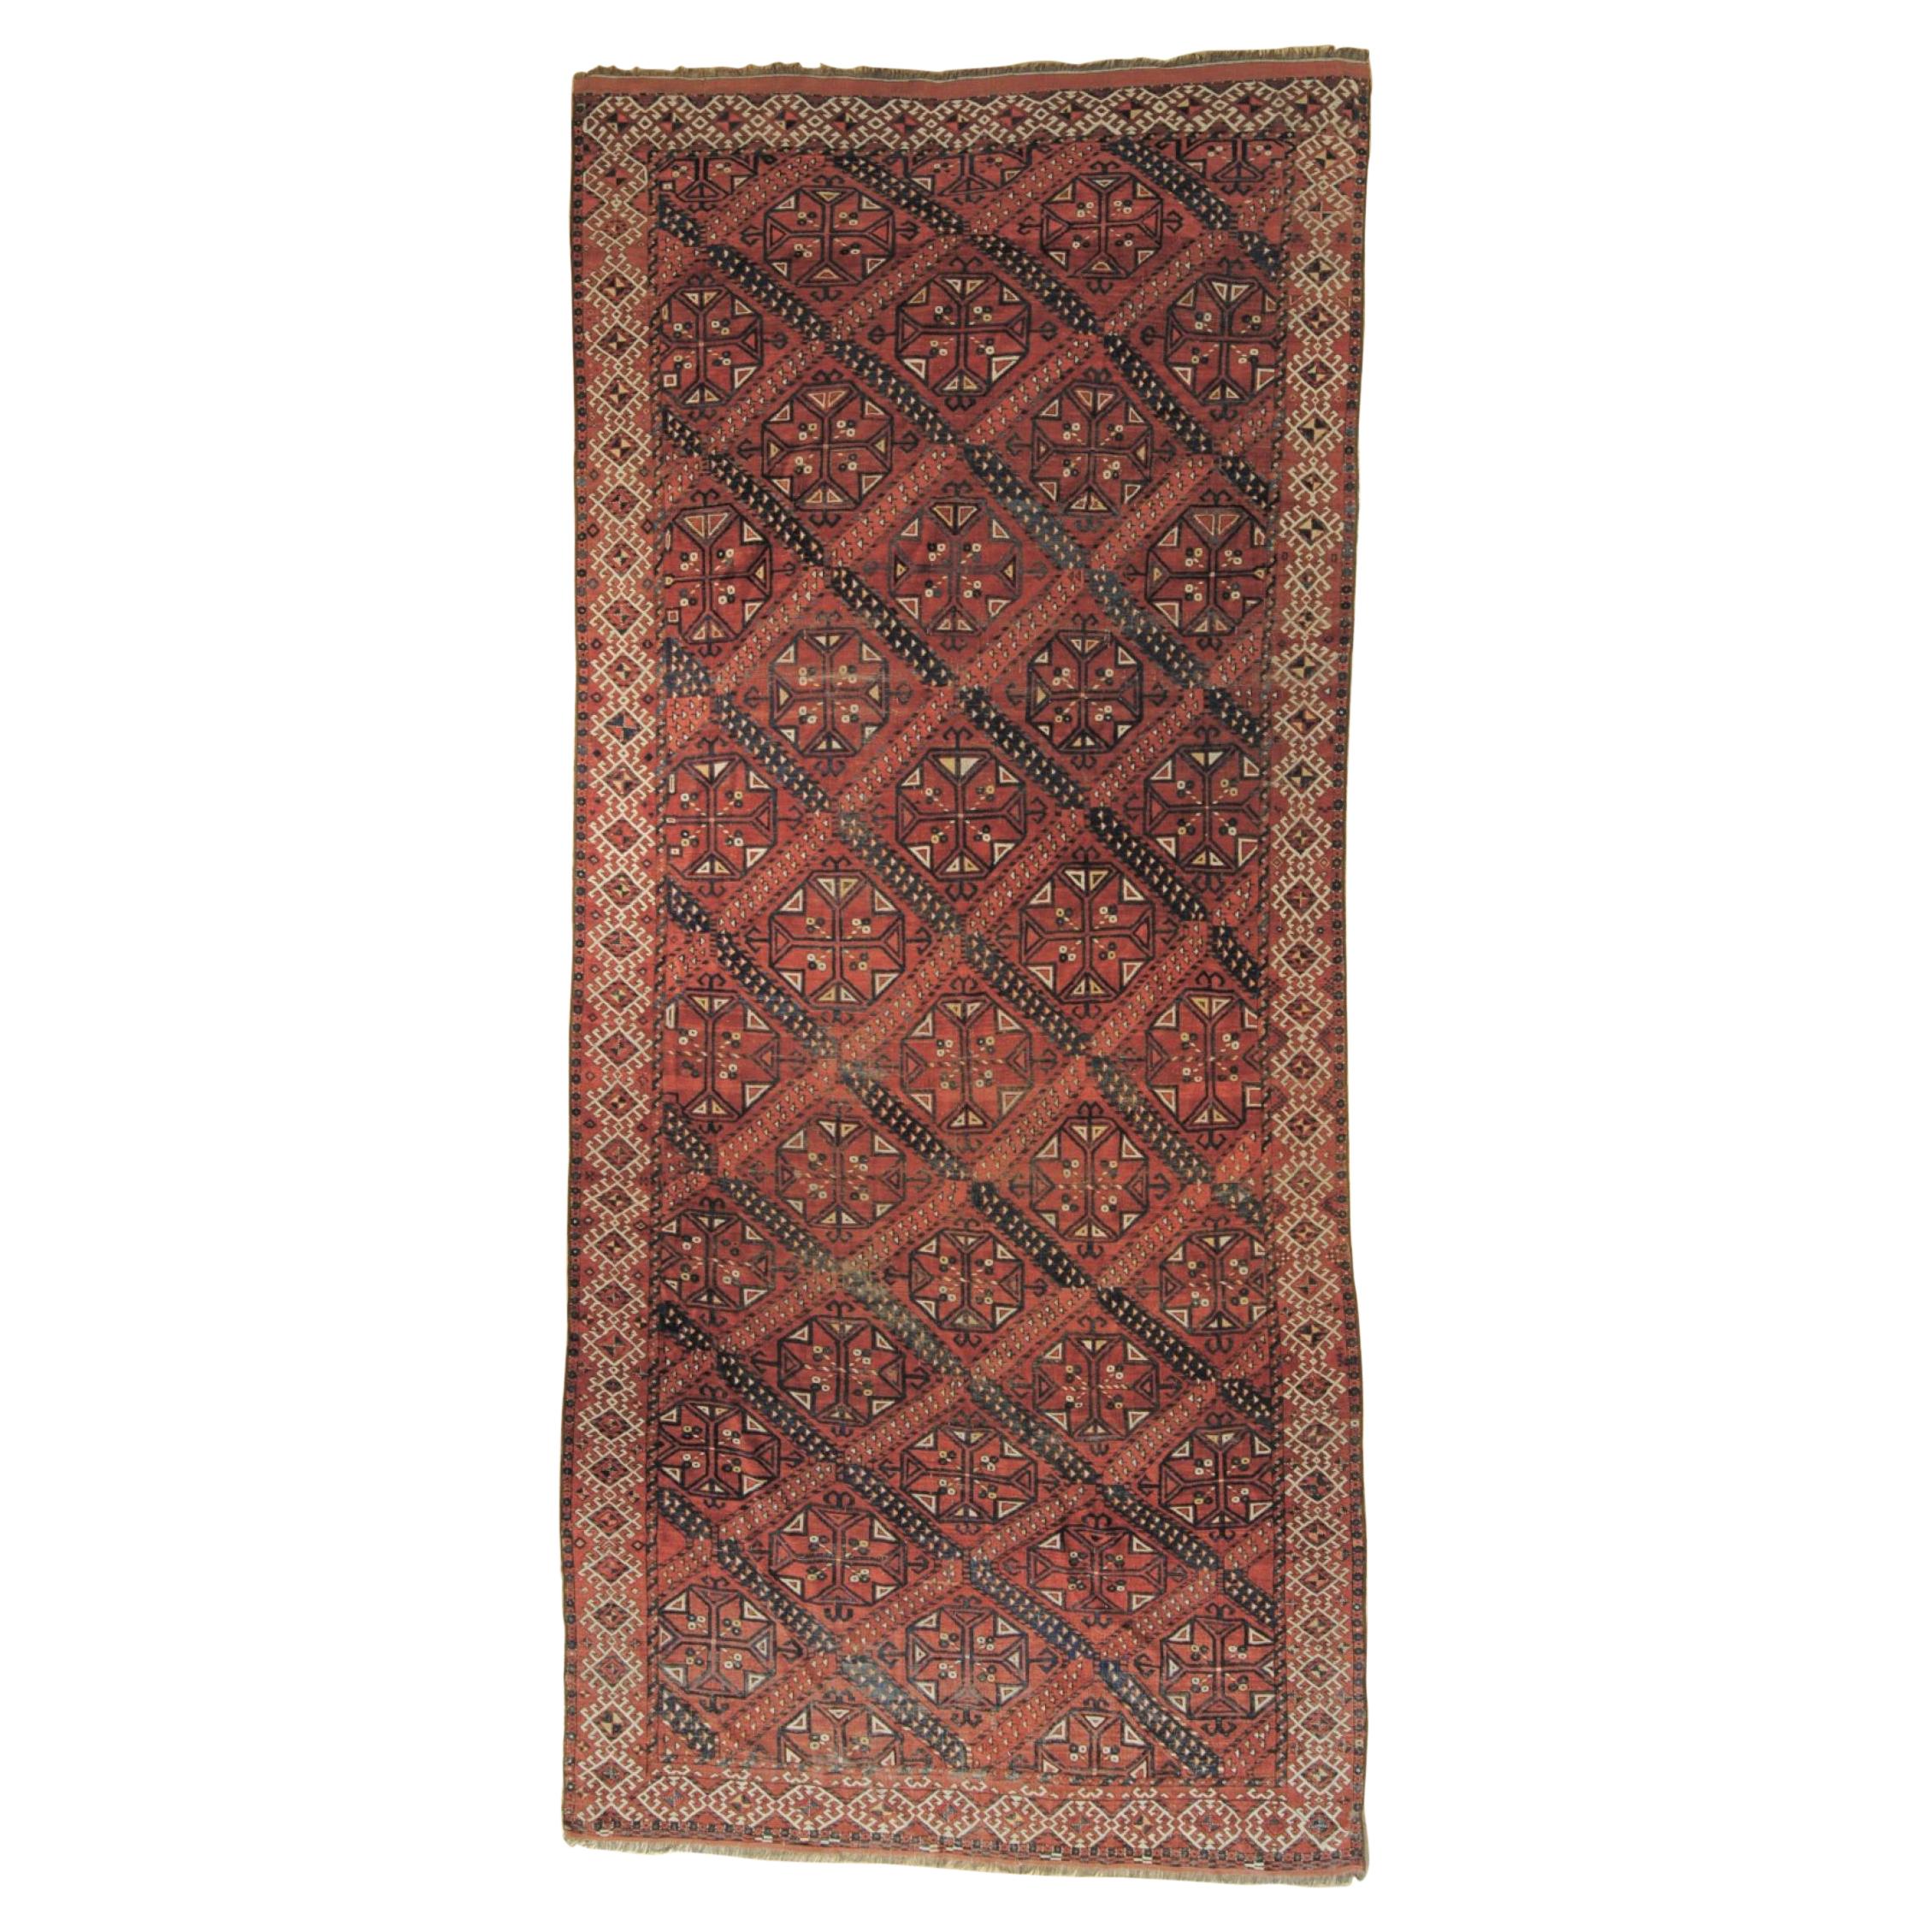 19th Century Antique Red Geometric Turkmen Erzari Rug € 9, 000, ca 1870 For Sale